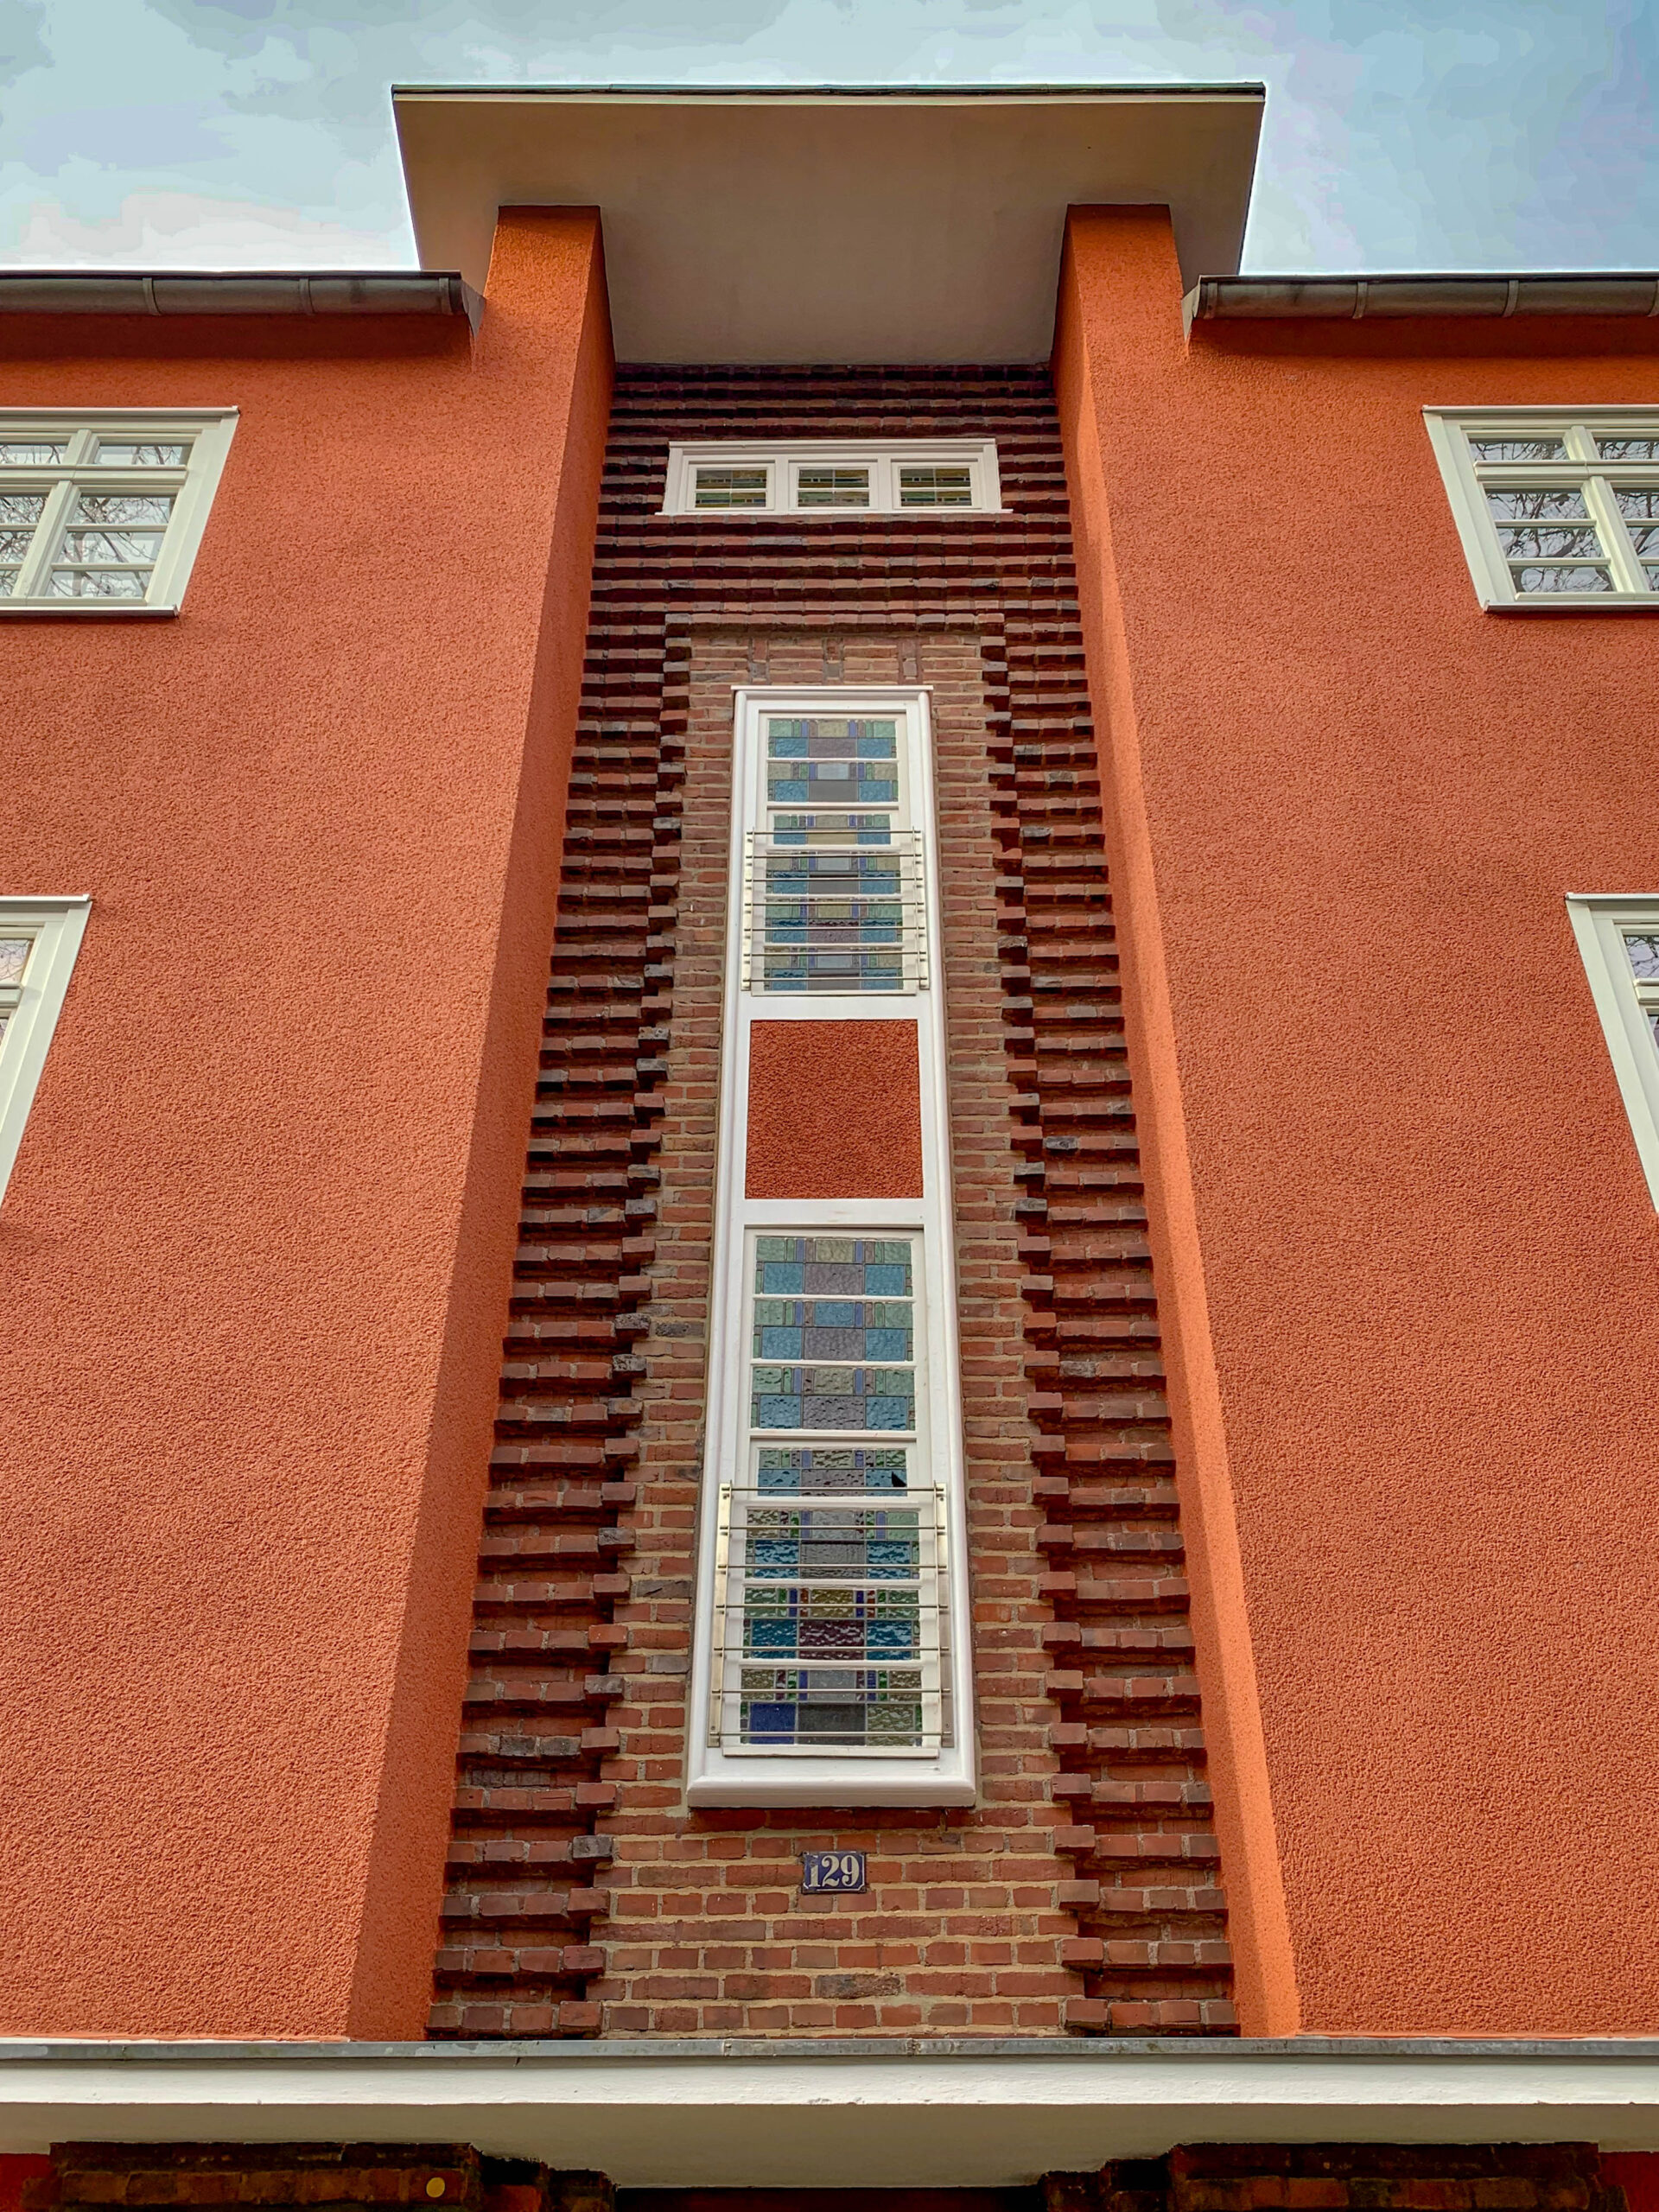 Housing Estate Alpener Strasse, 1927-1928. Architect: Otto Müller-Jena. Photo: Daniela Christmann